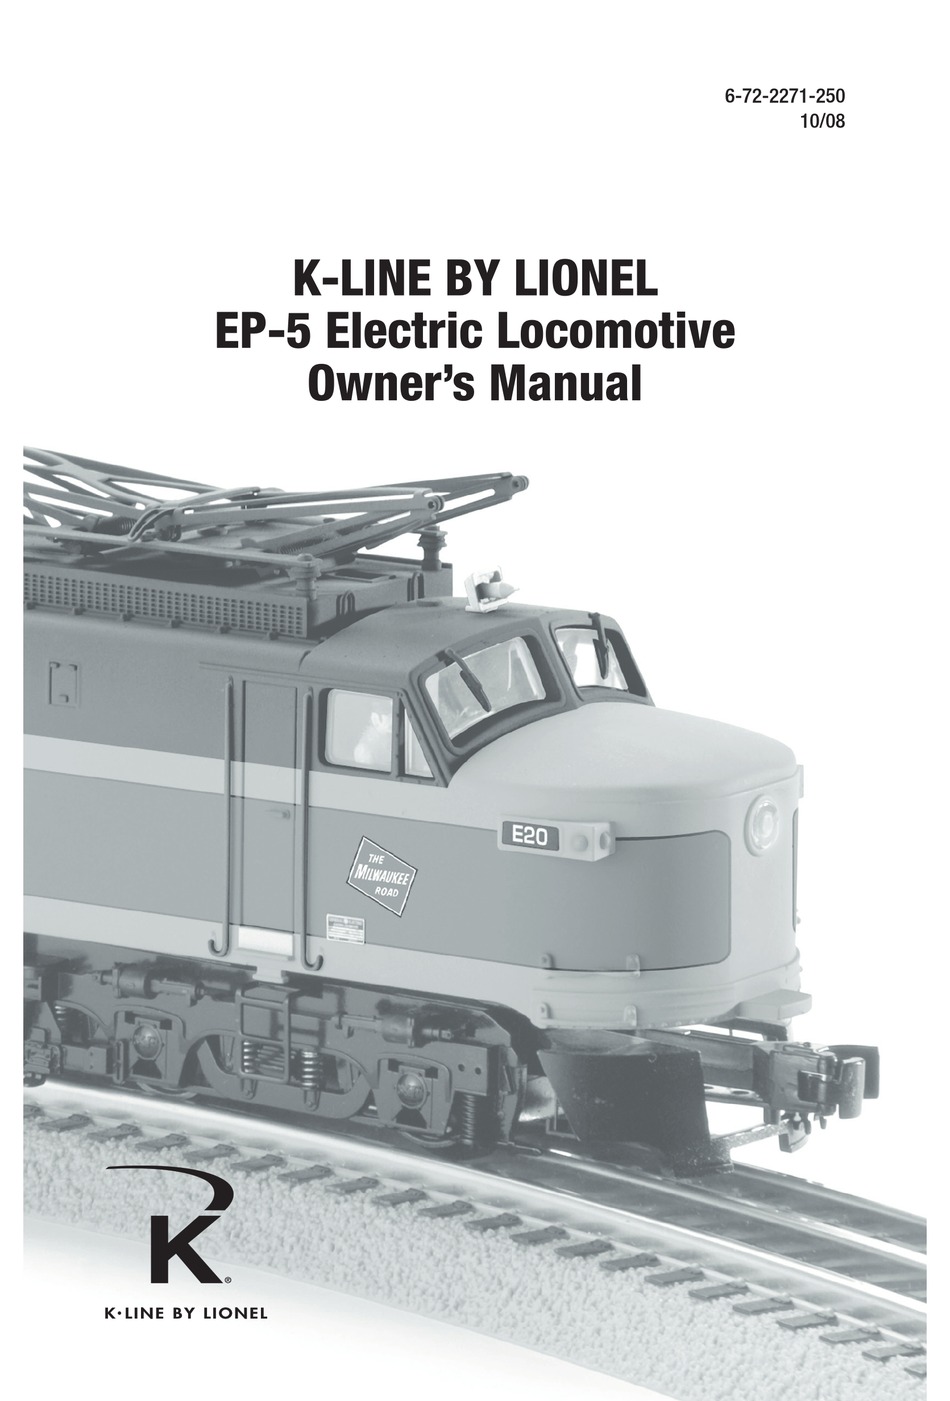 K LINE BY LIONEL 2007 VOLUME 2 TRAIN CATALOG book manual publication ad kline O 